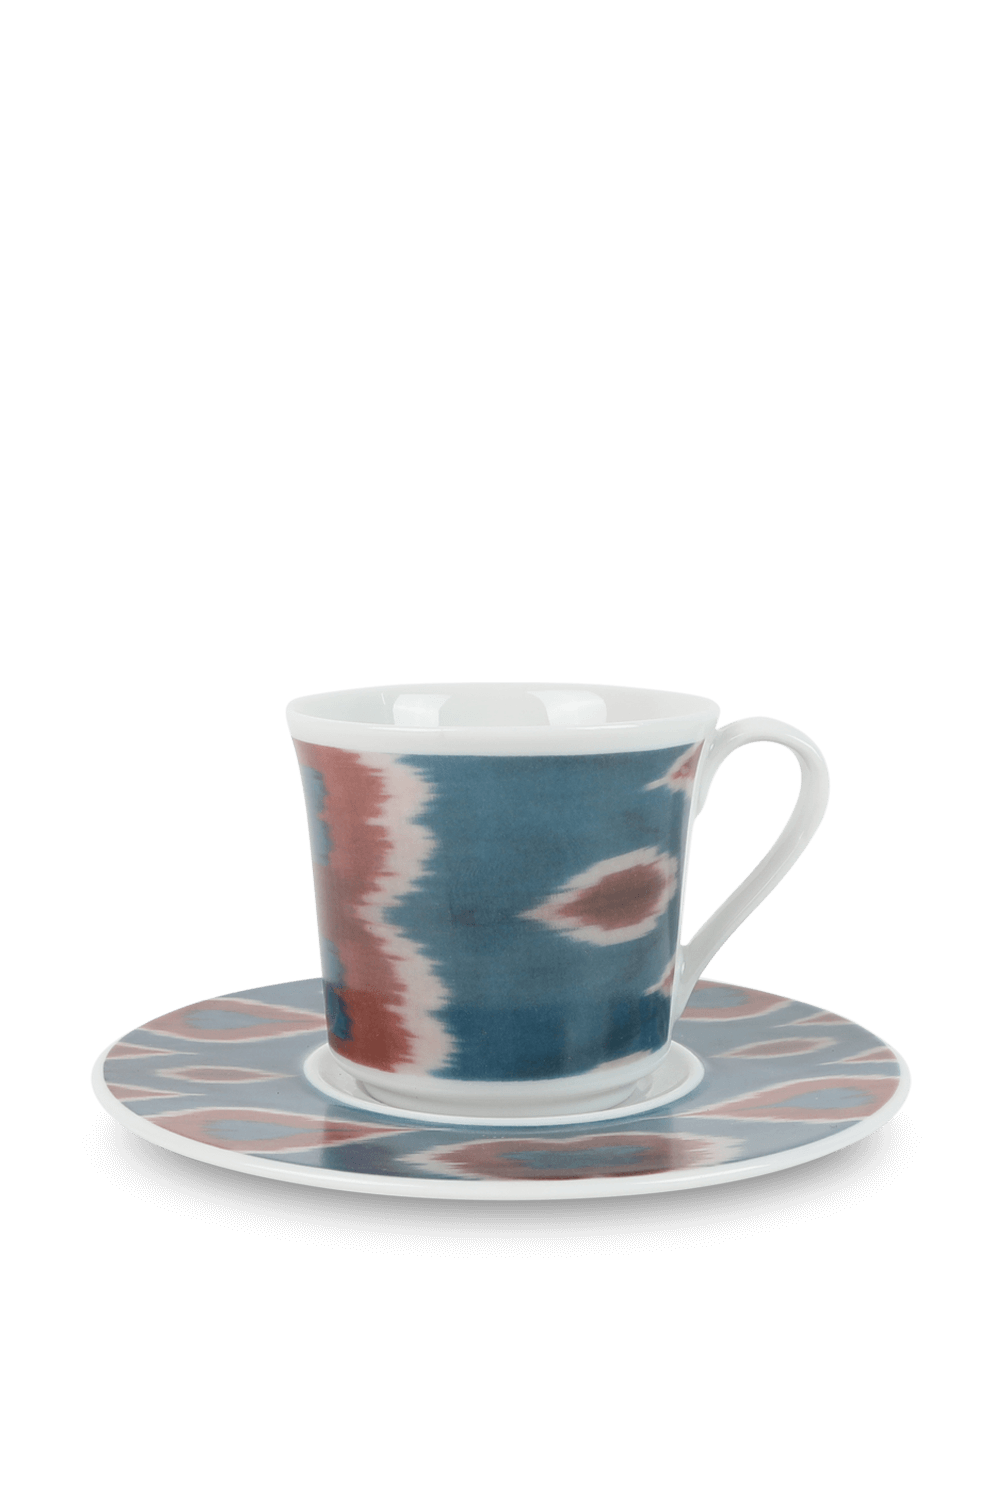 כוס פורצלן עם תחתית בהדפס גראפי כחול וחום ן LES OTTOMANS